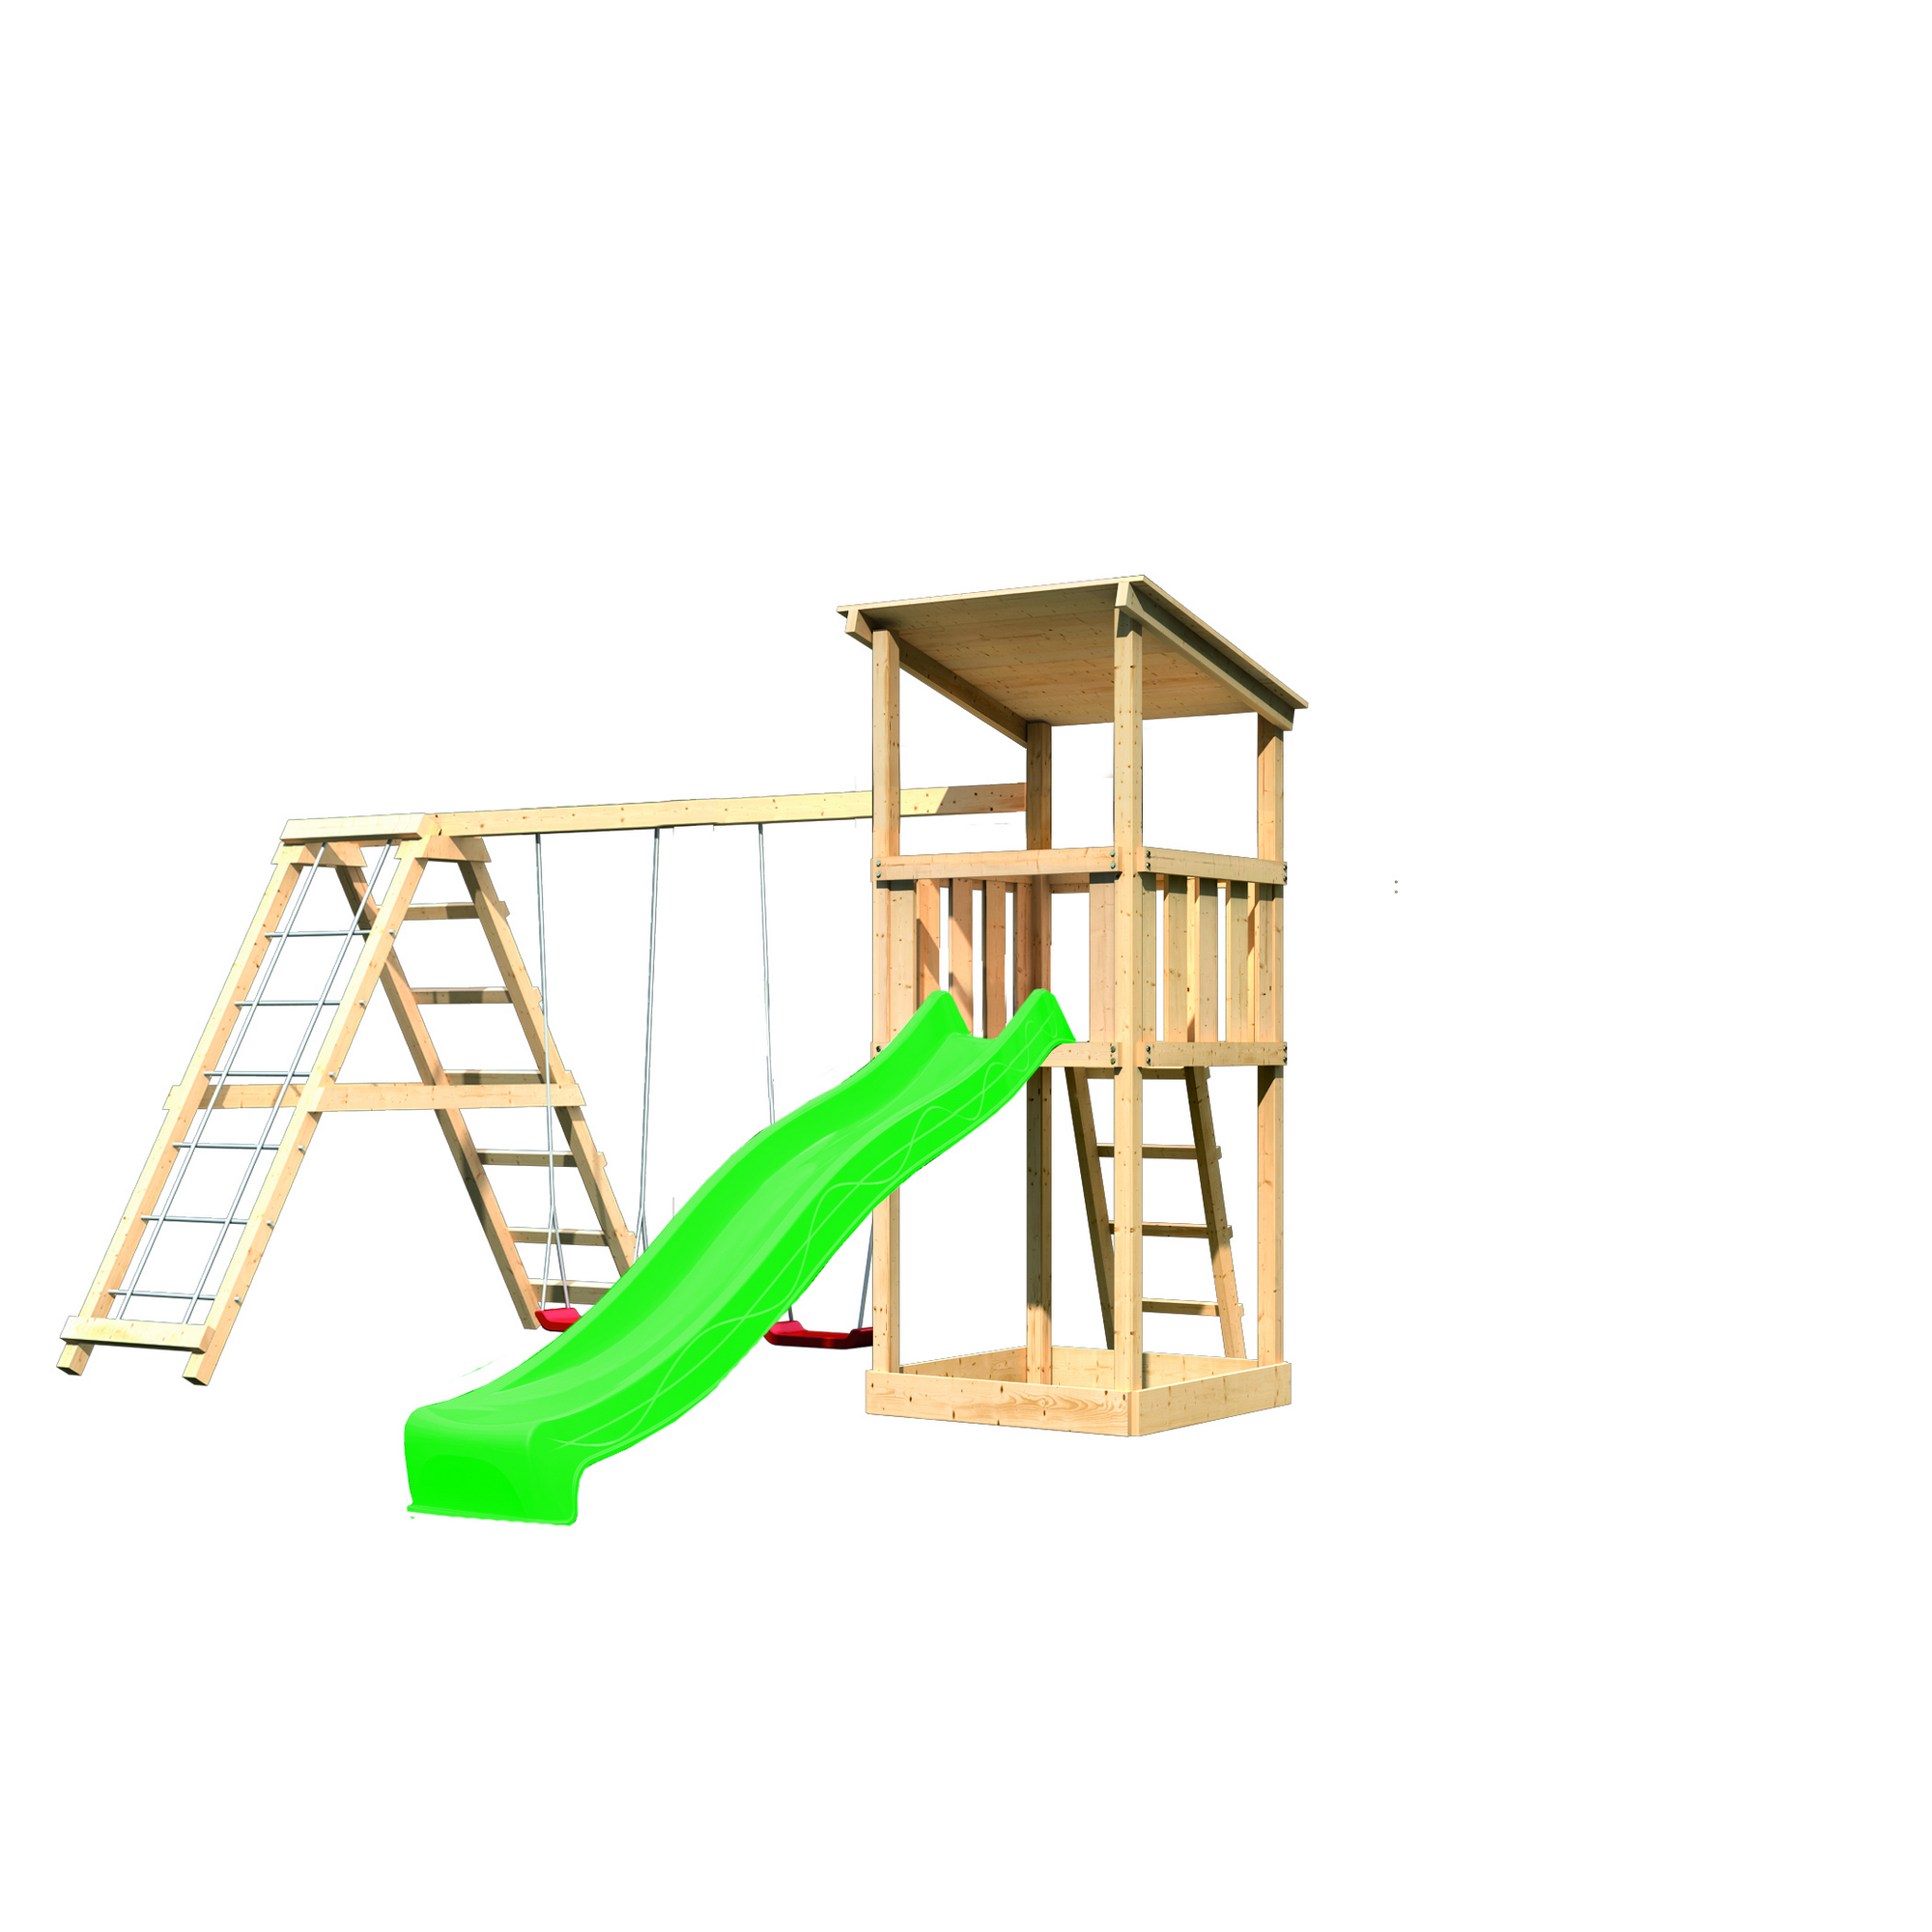 Spielturm 'Anna' Doppelschaukel, Klettergerüst, Rutsche grün, 415 x 264 x 270 cm + product picture